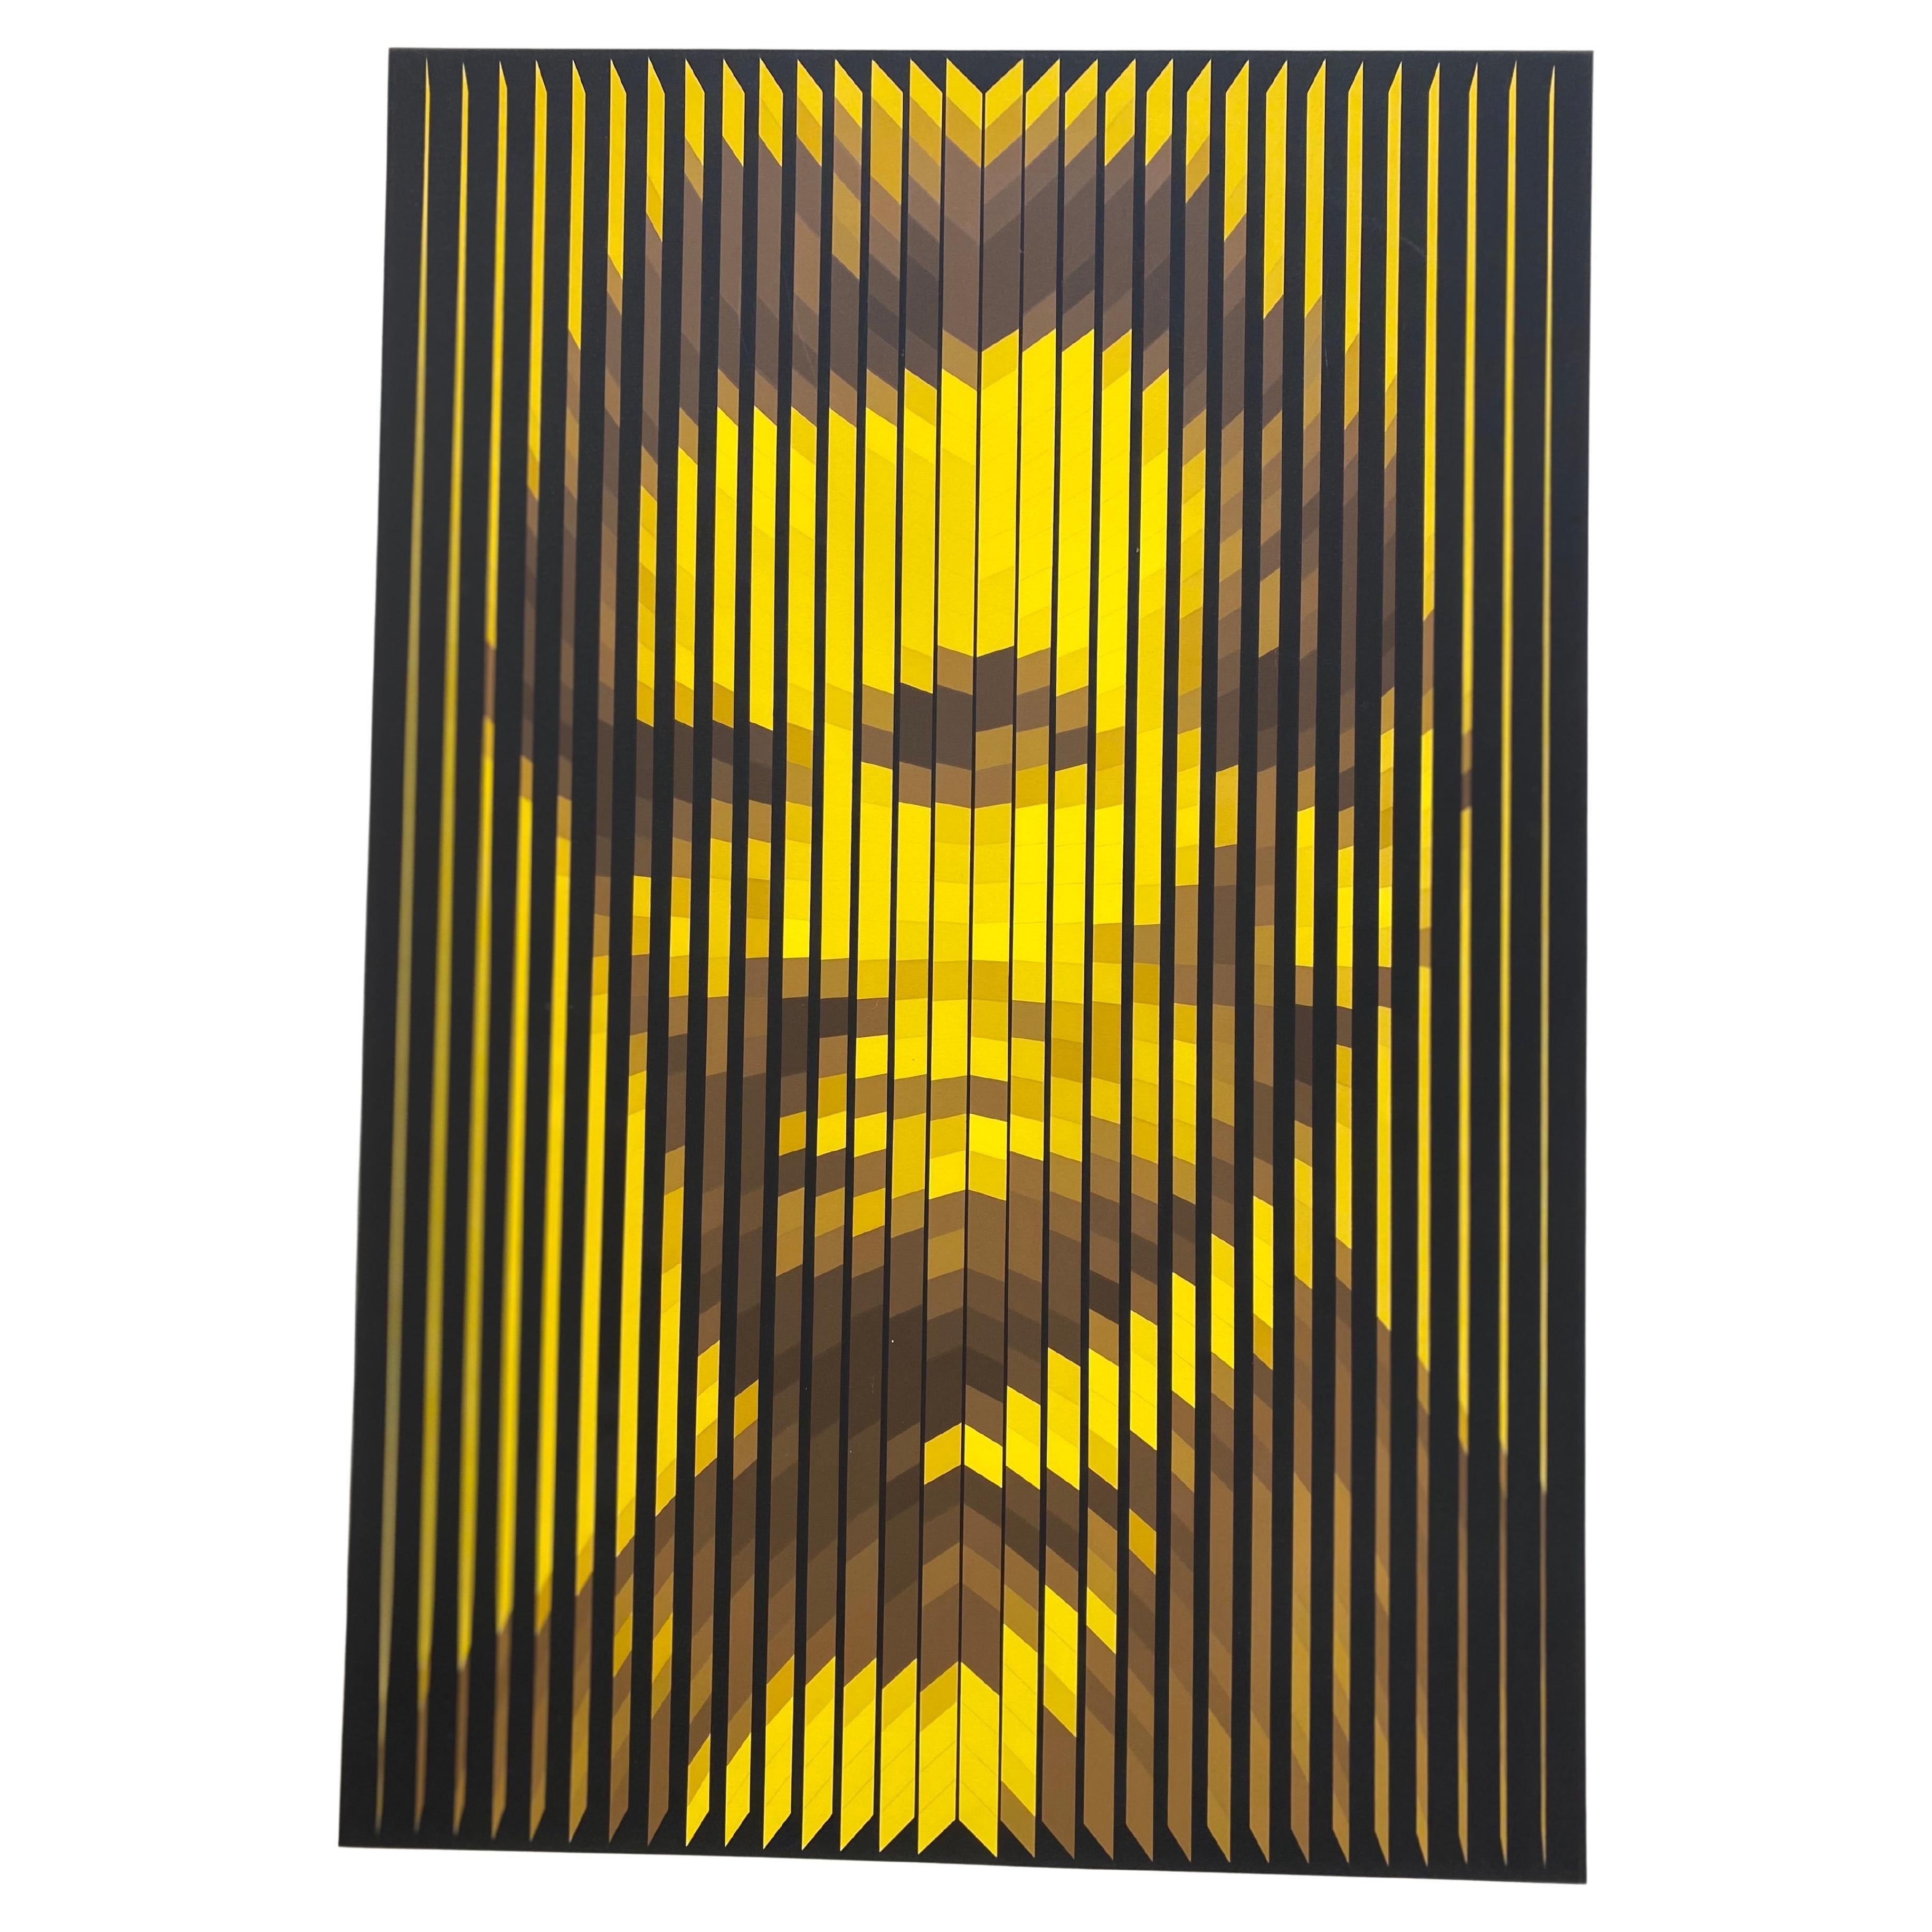 YVARAL – „Abraham Lincoln, 1979 im Angebot